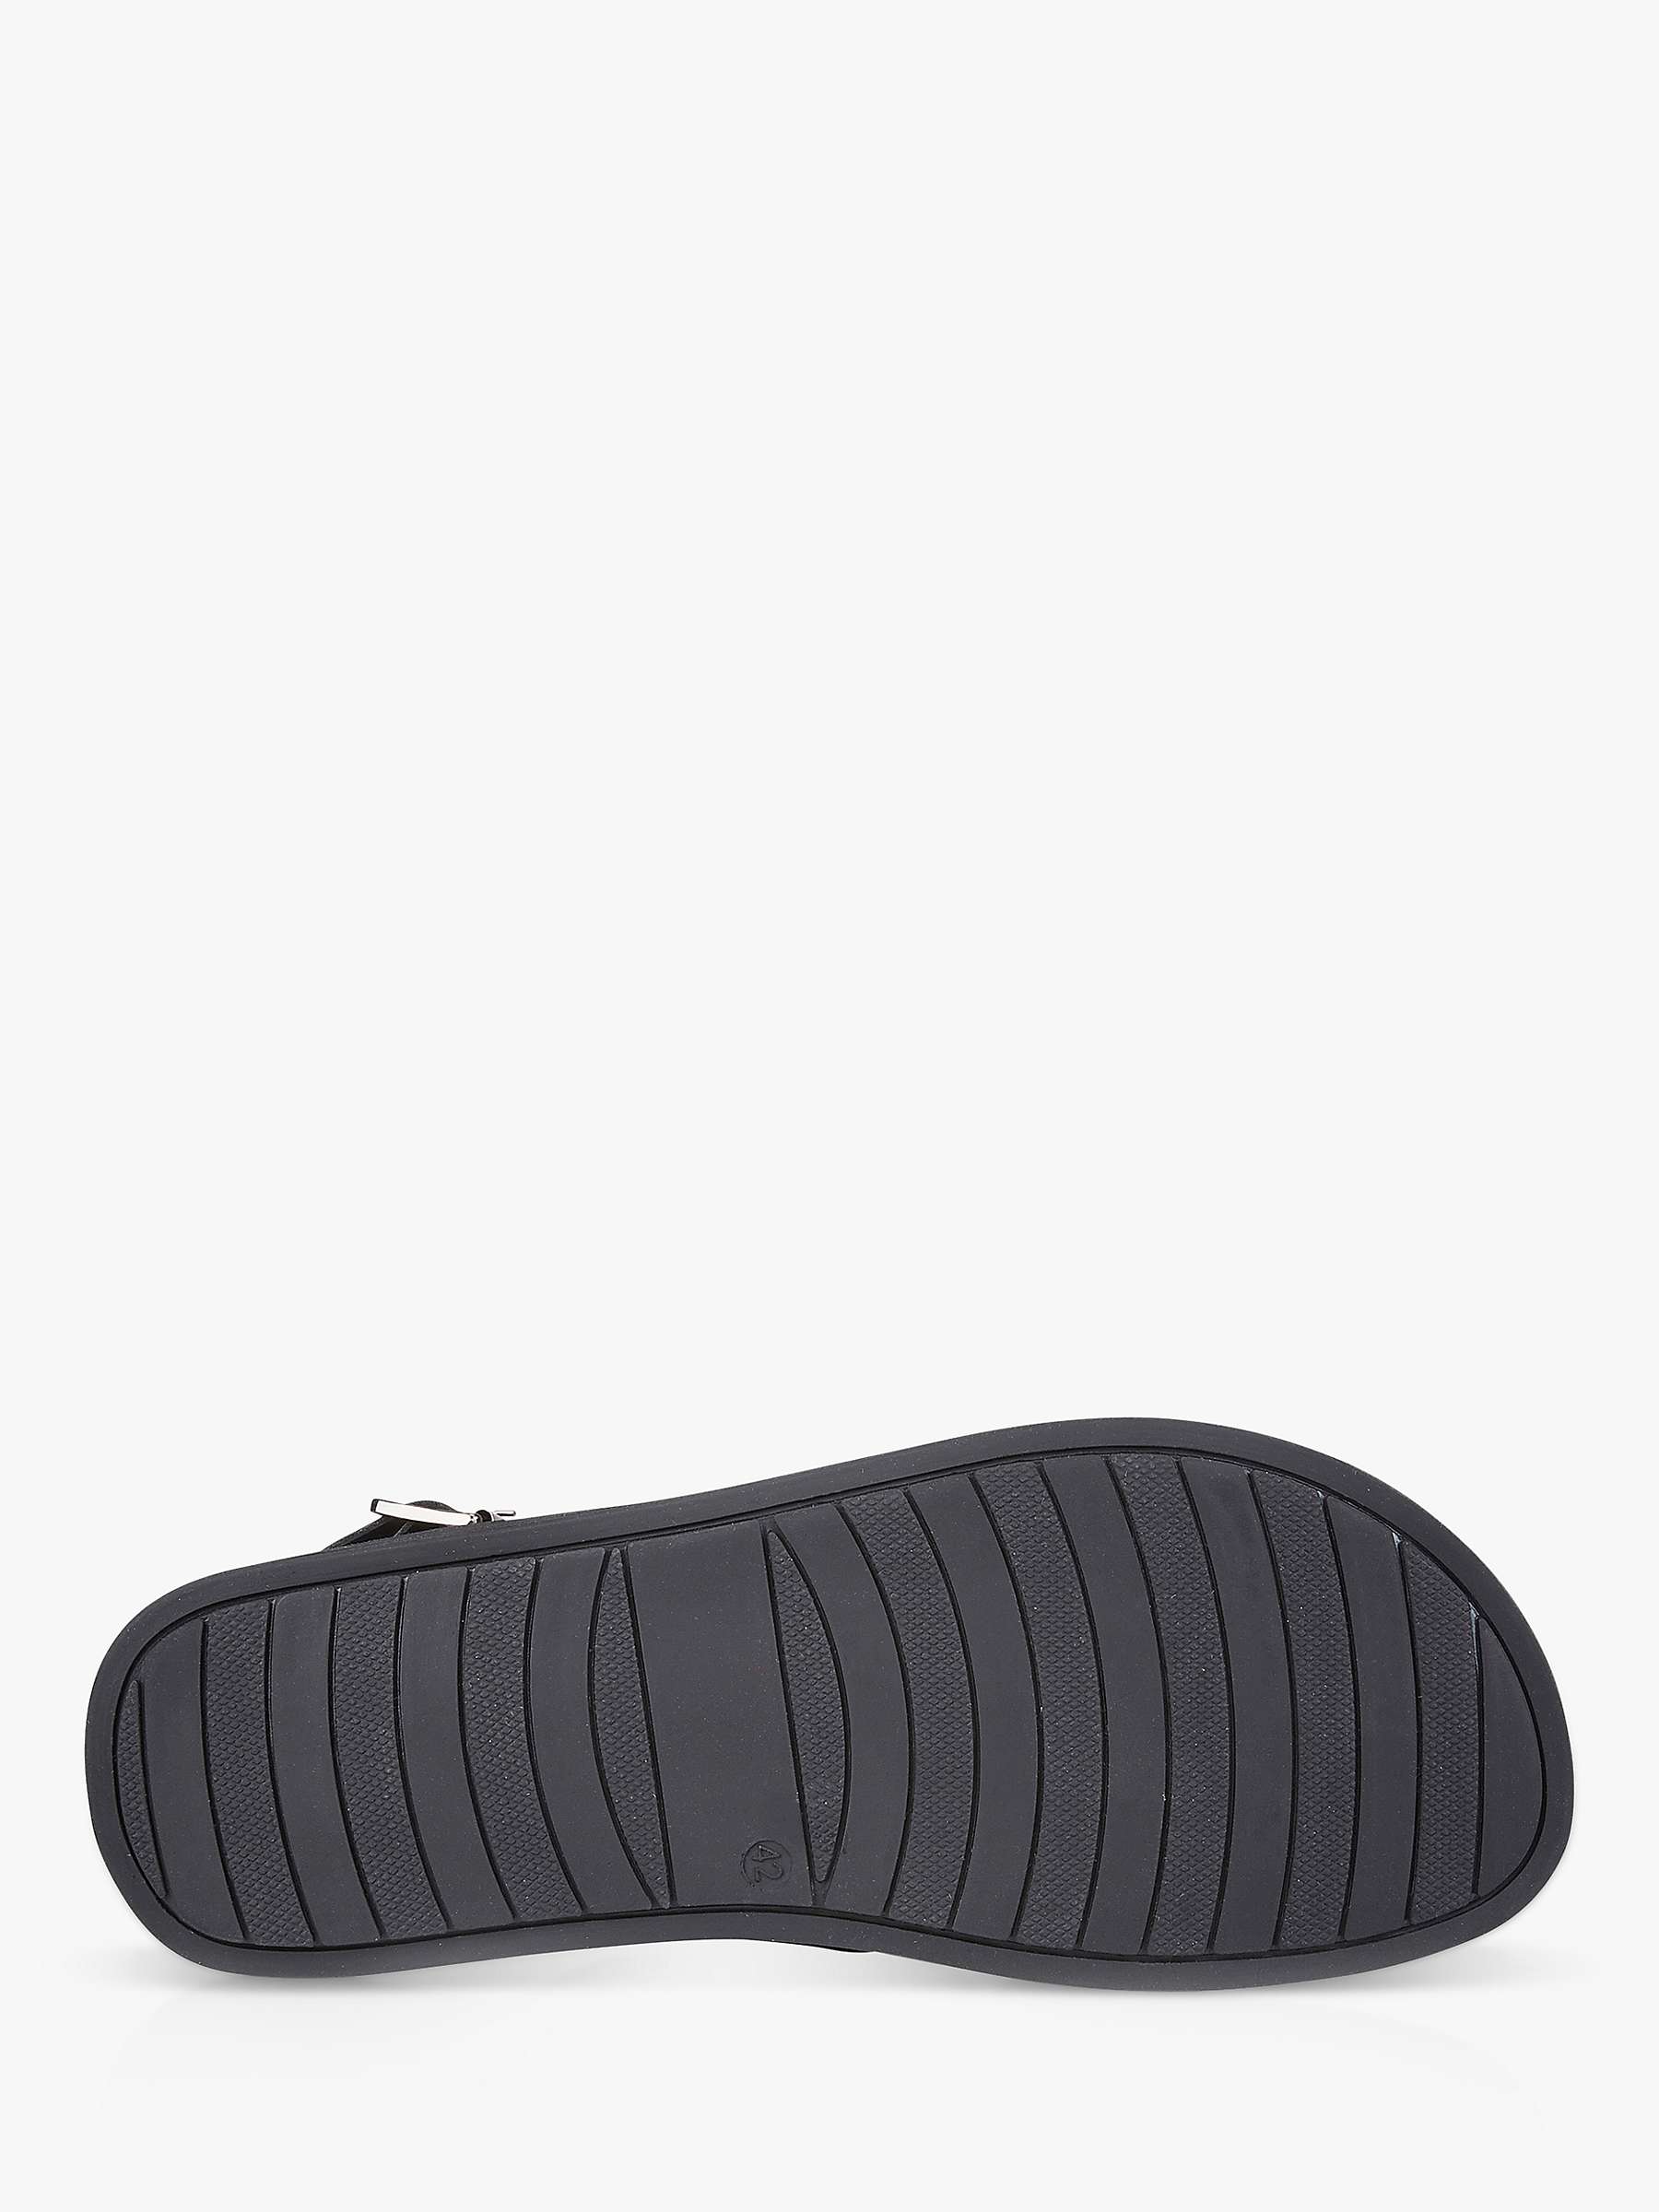 Buy Silver Street London Croydon Leather Sandals, Black Online at johnlewis.com